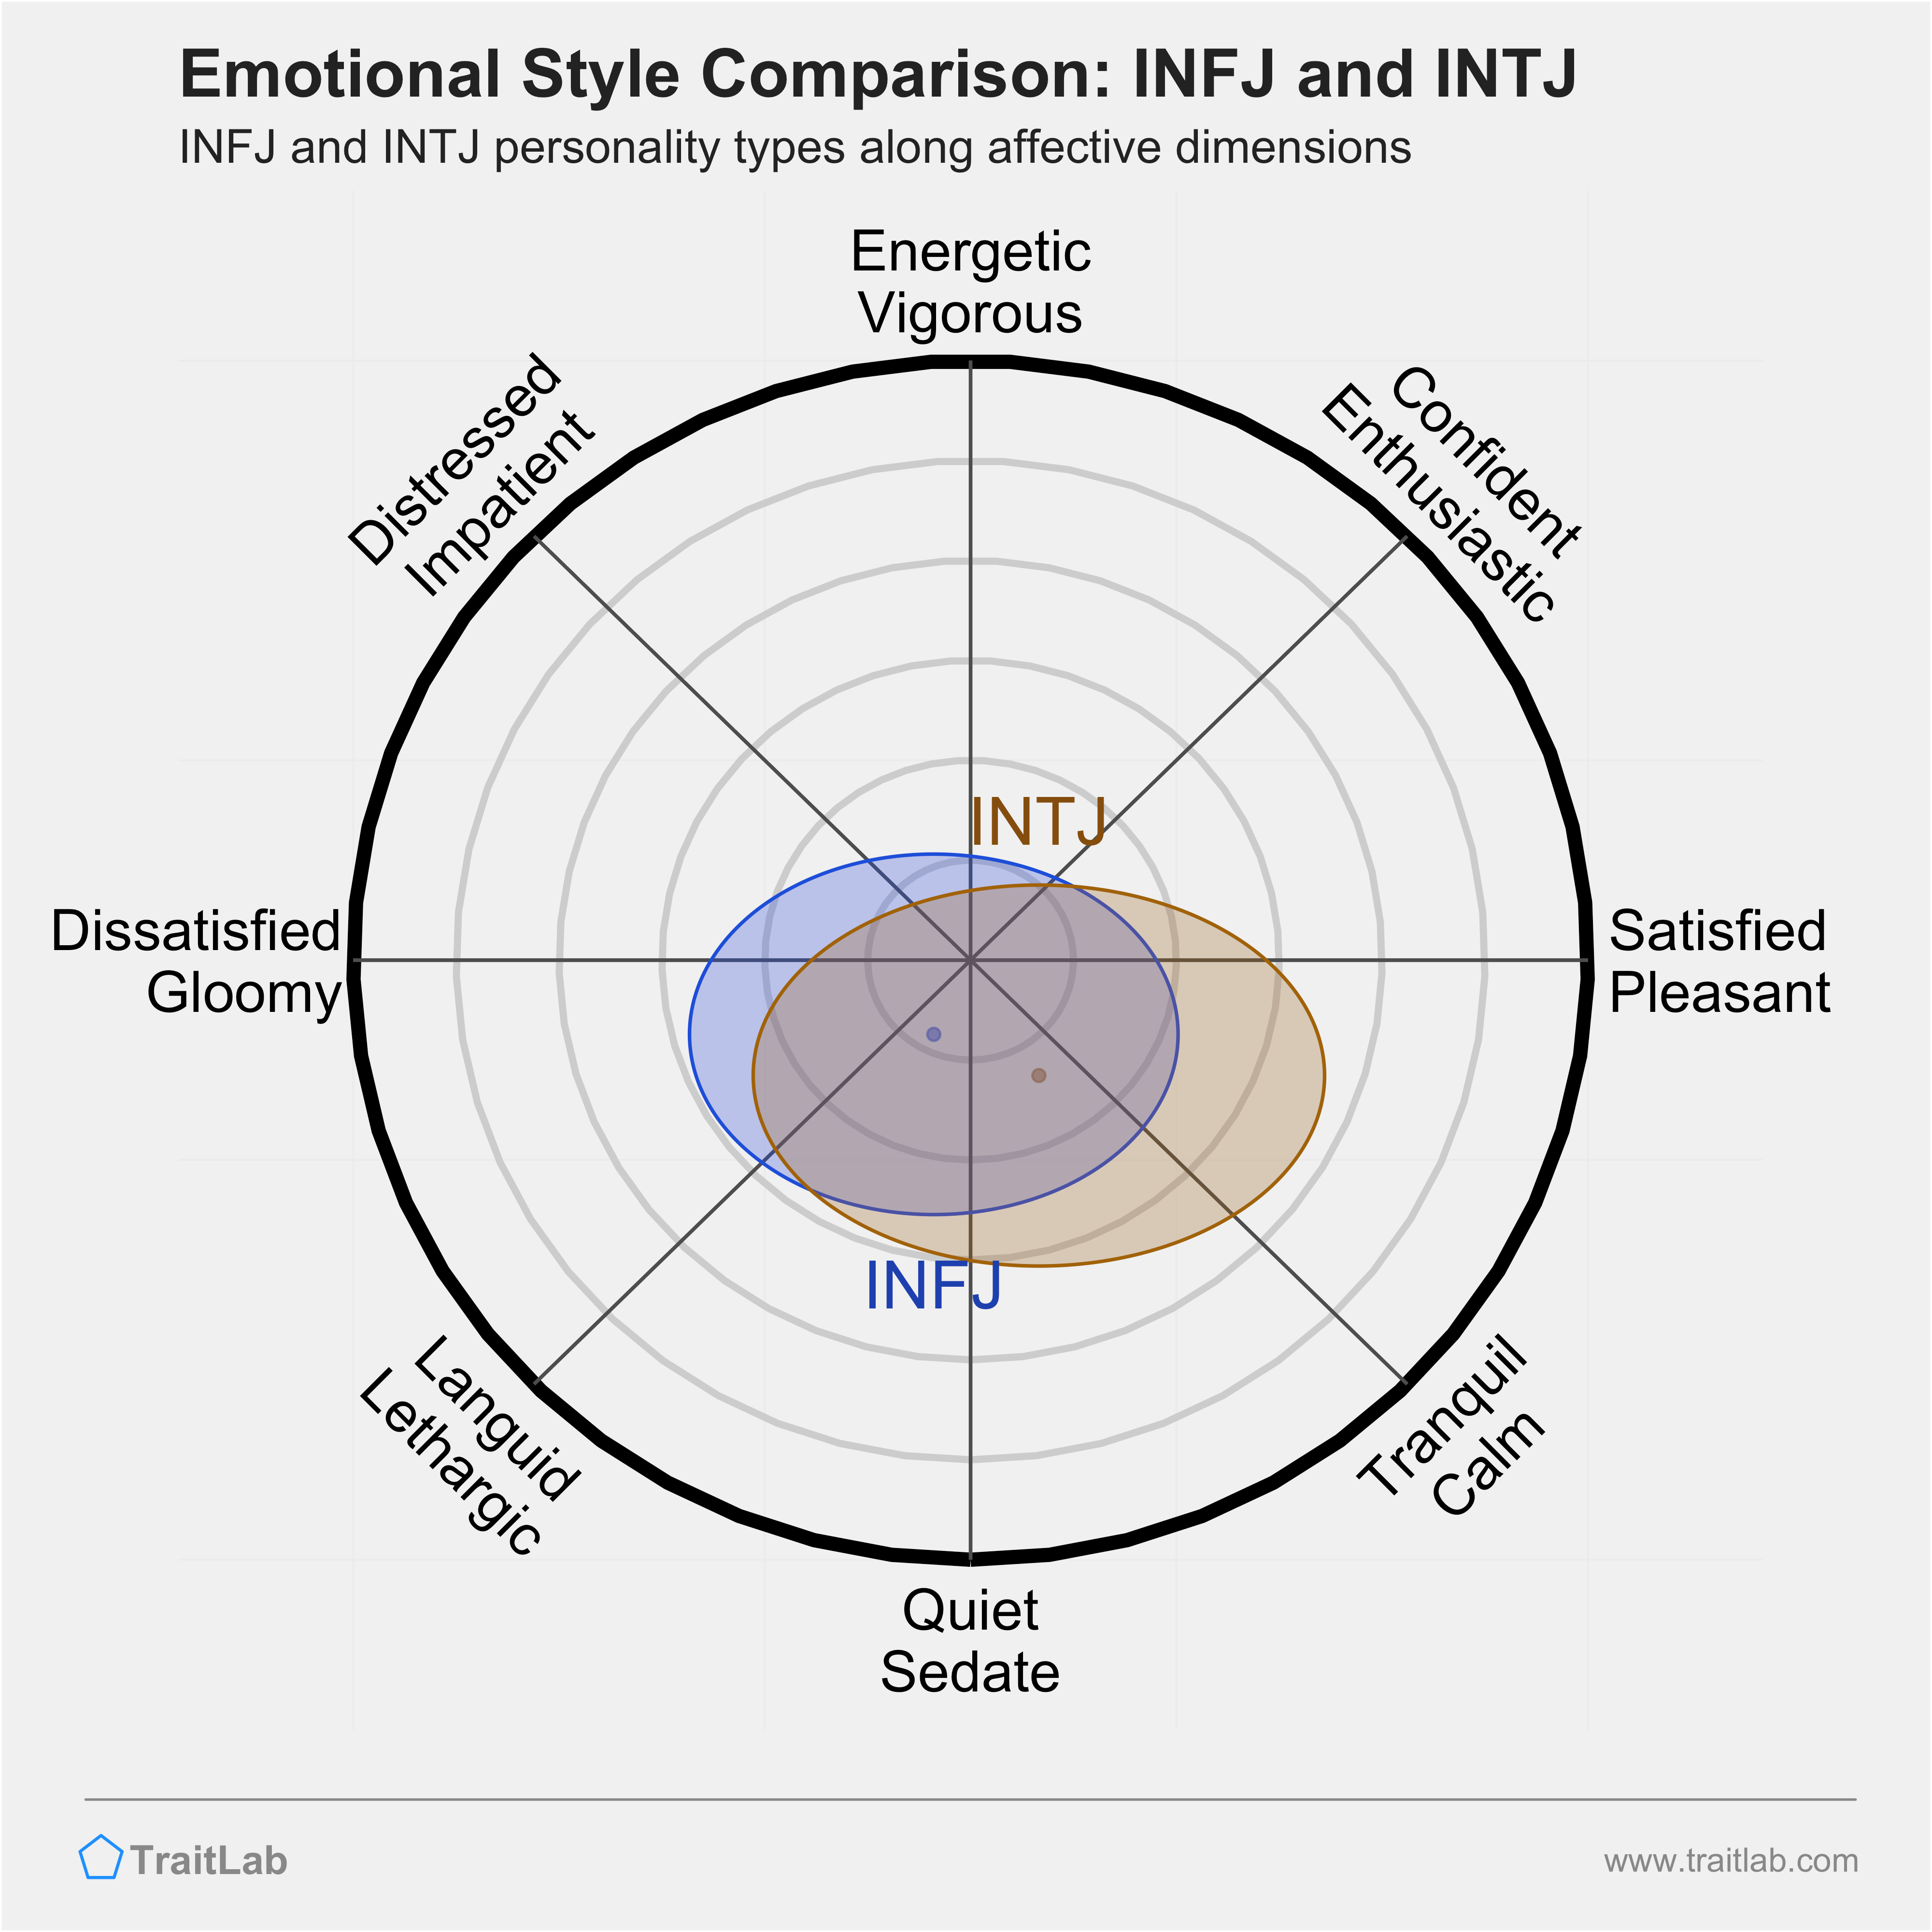 INFJ and INTJ comparison across emotional (affective) dimensions